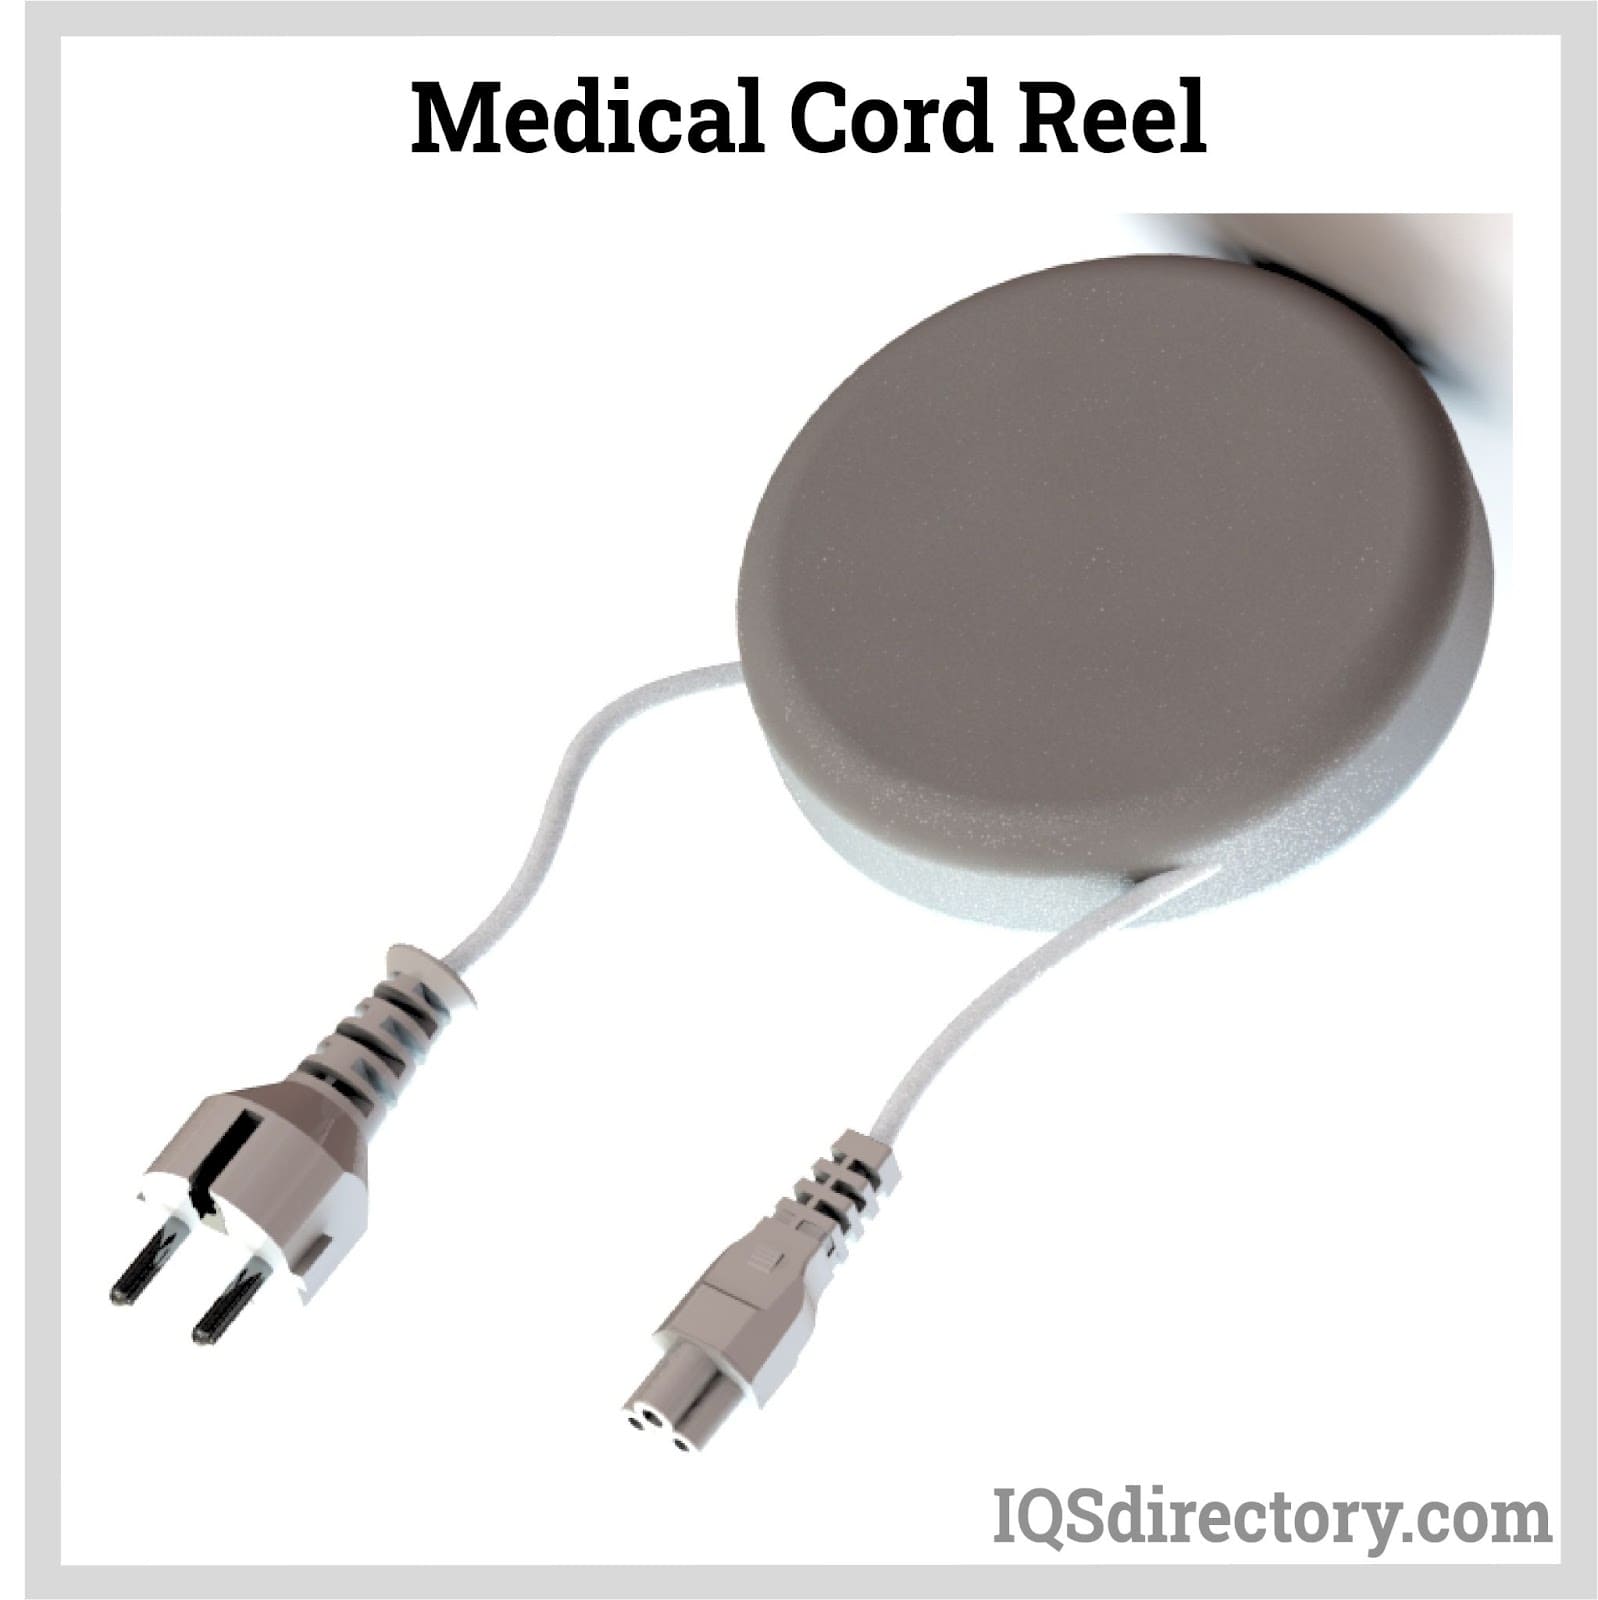 Medical Cord Reel